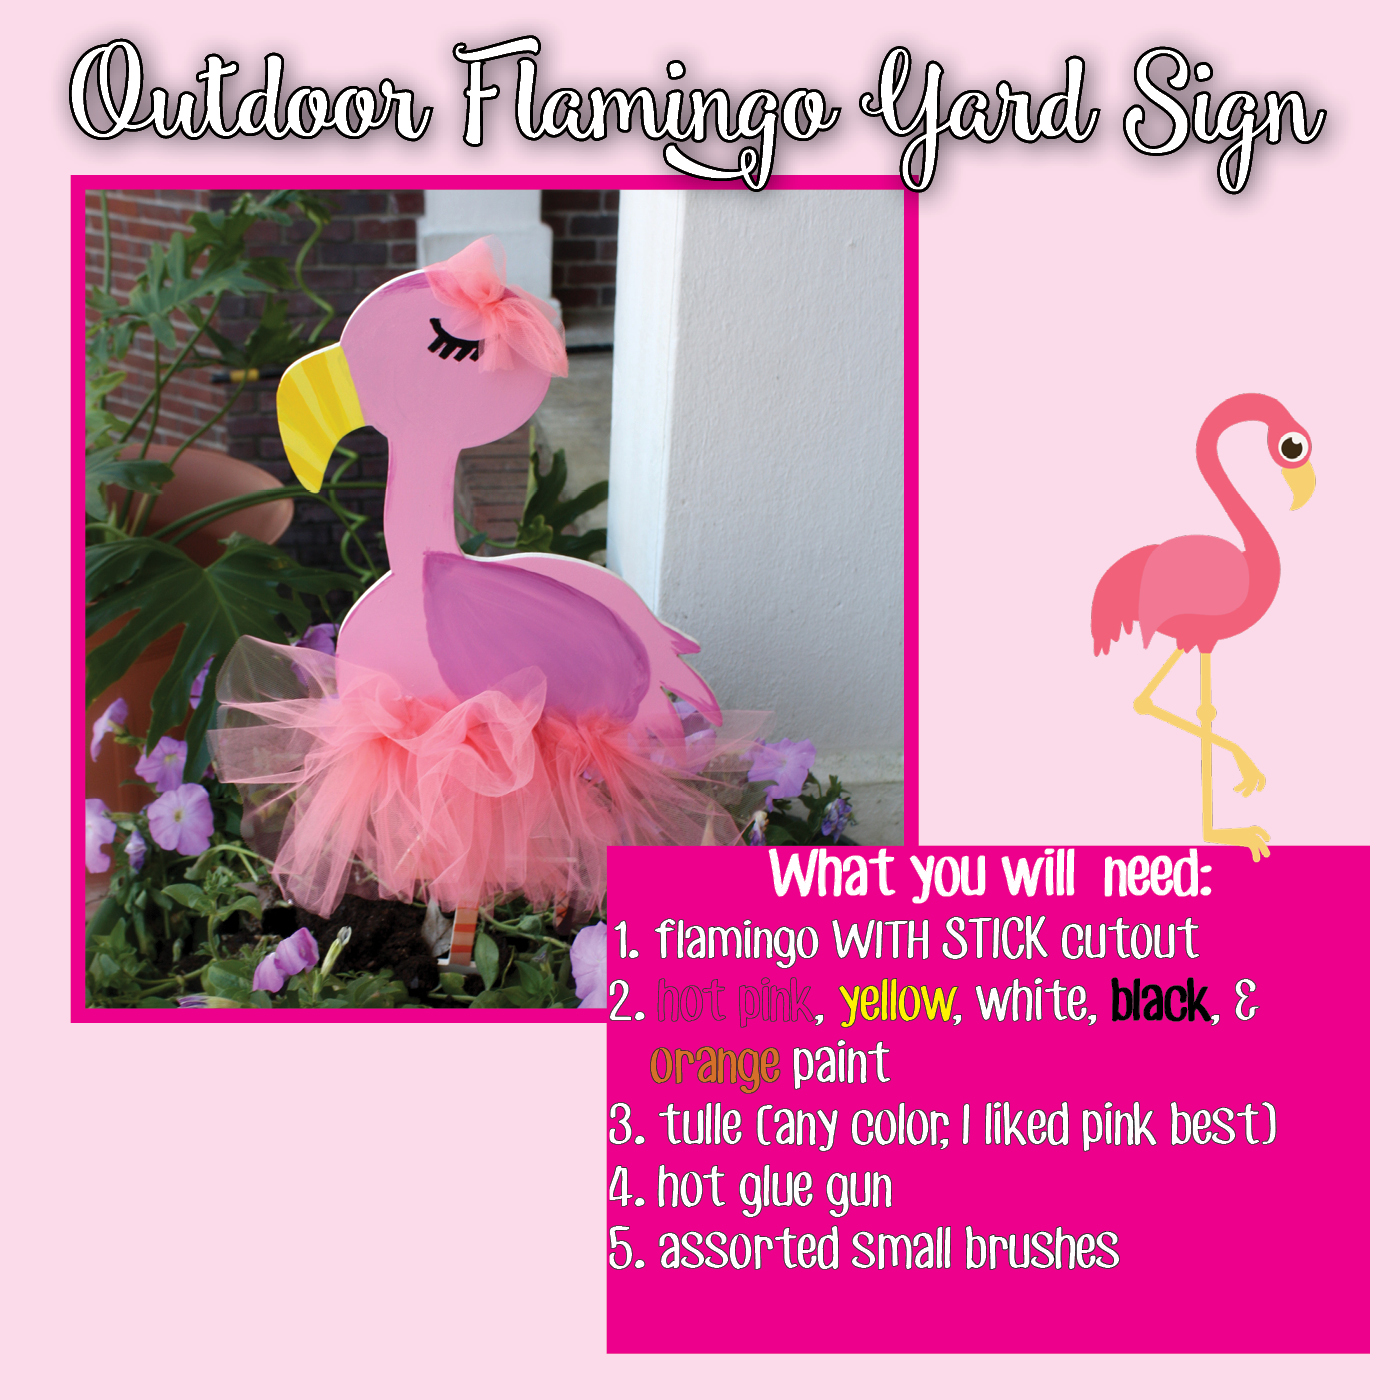 Flamingo with stick cutout